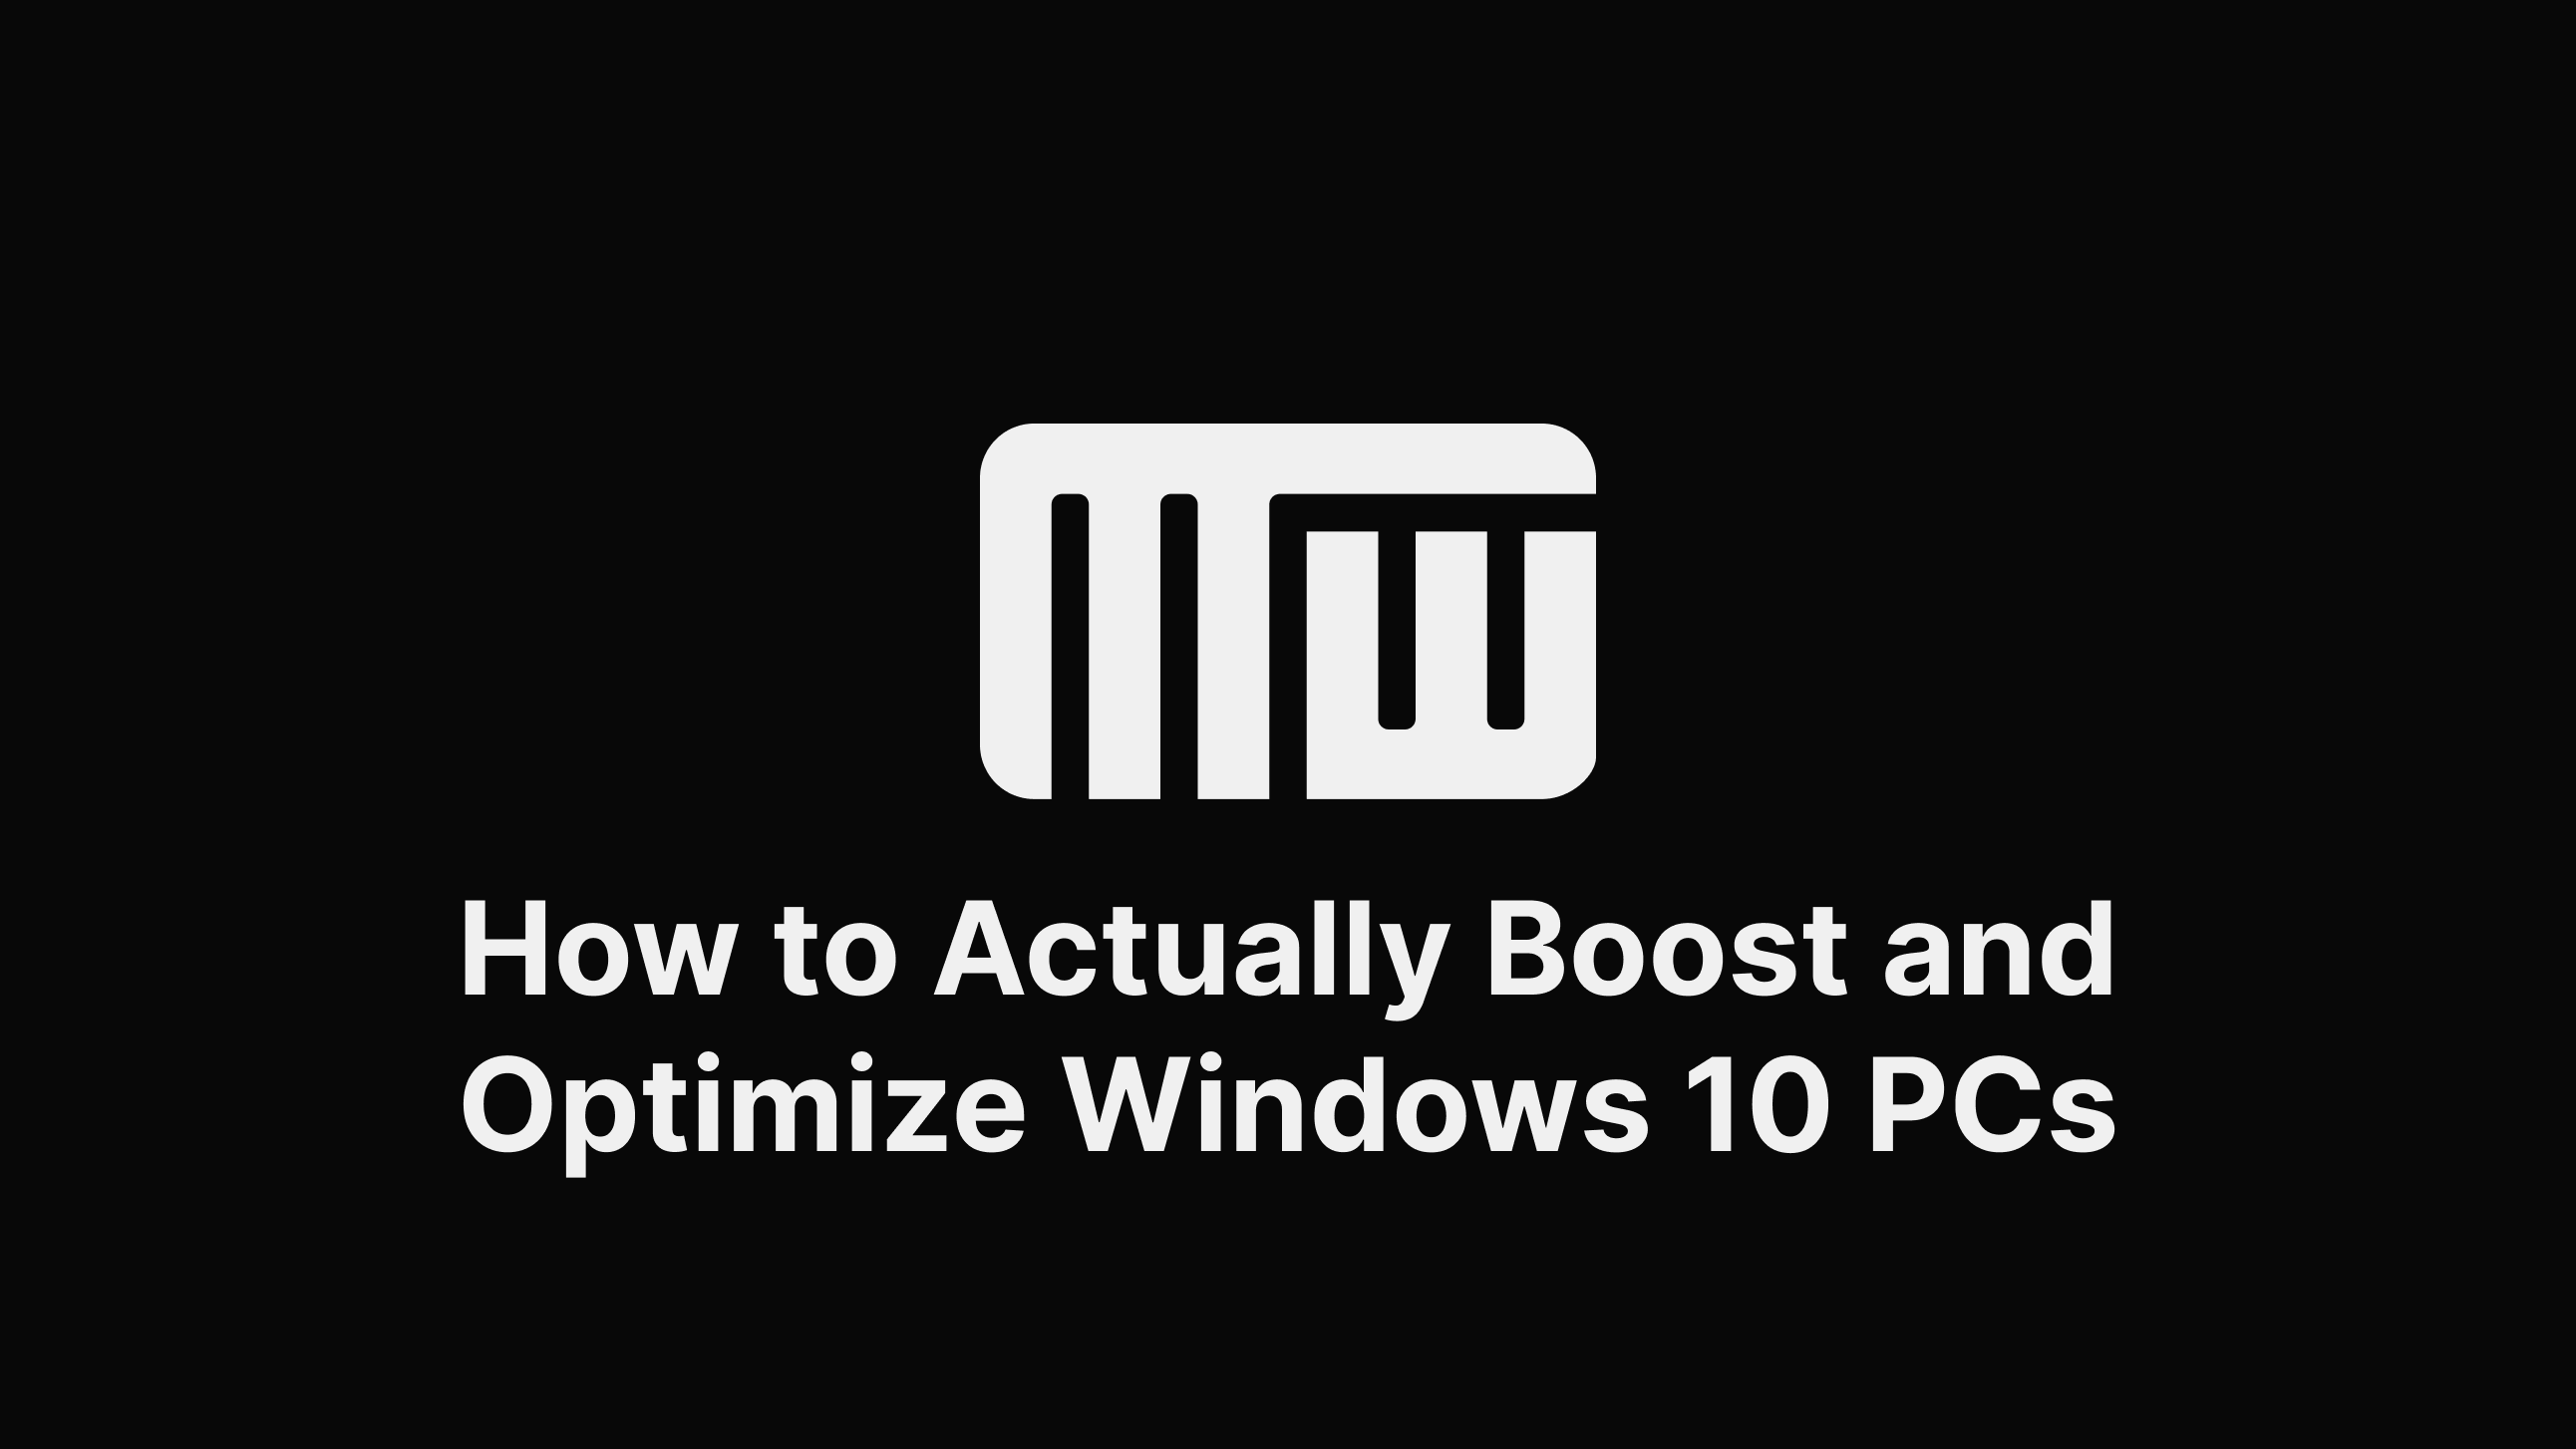 Optimize Windows 10 PCs, the Actual Best Ultimate Optimization Guide